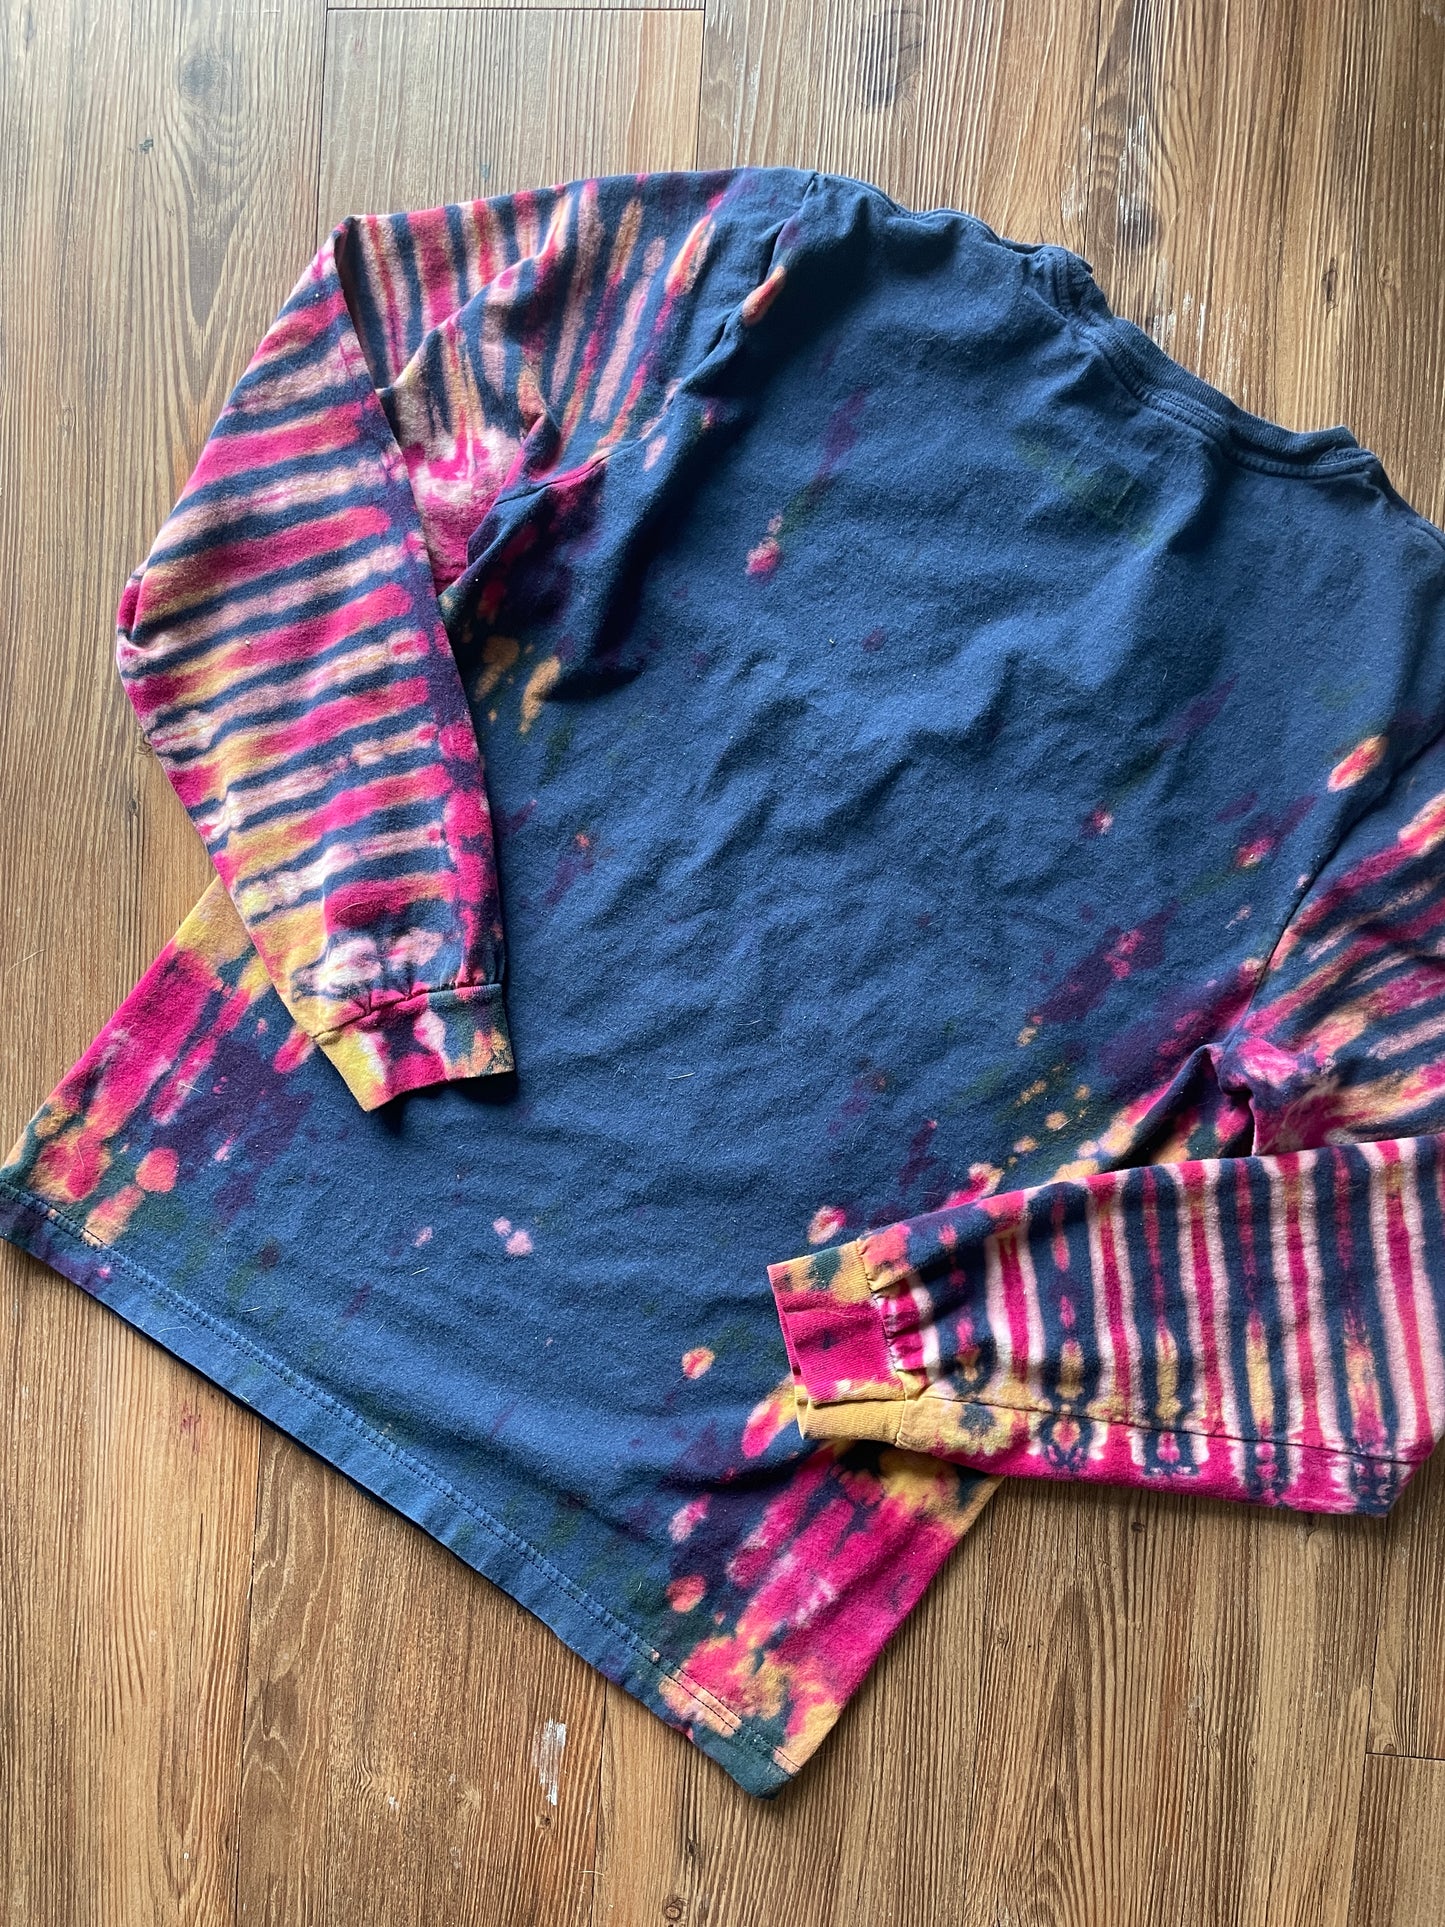 MEDIUM Men’s adidas Real Salt Lake Handmade Tie Dye T-Shirt | Navy Blue, Red, and Purple Long Sleeve Tee